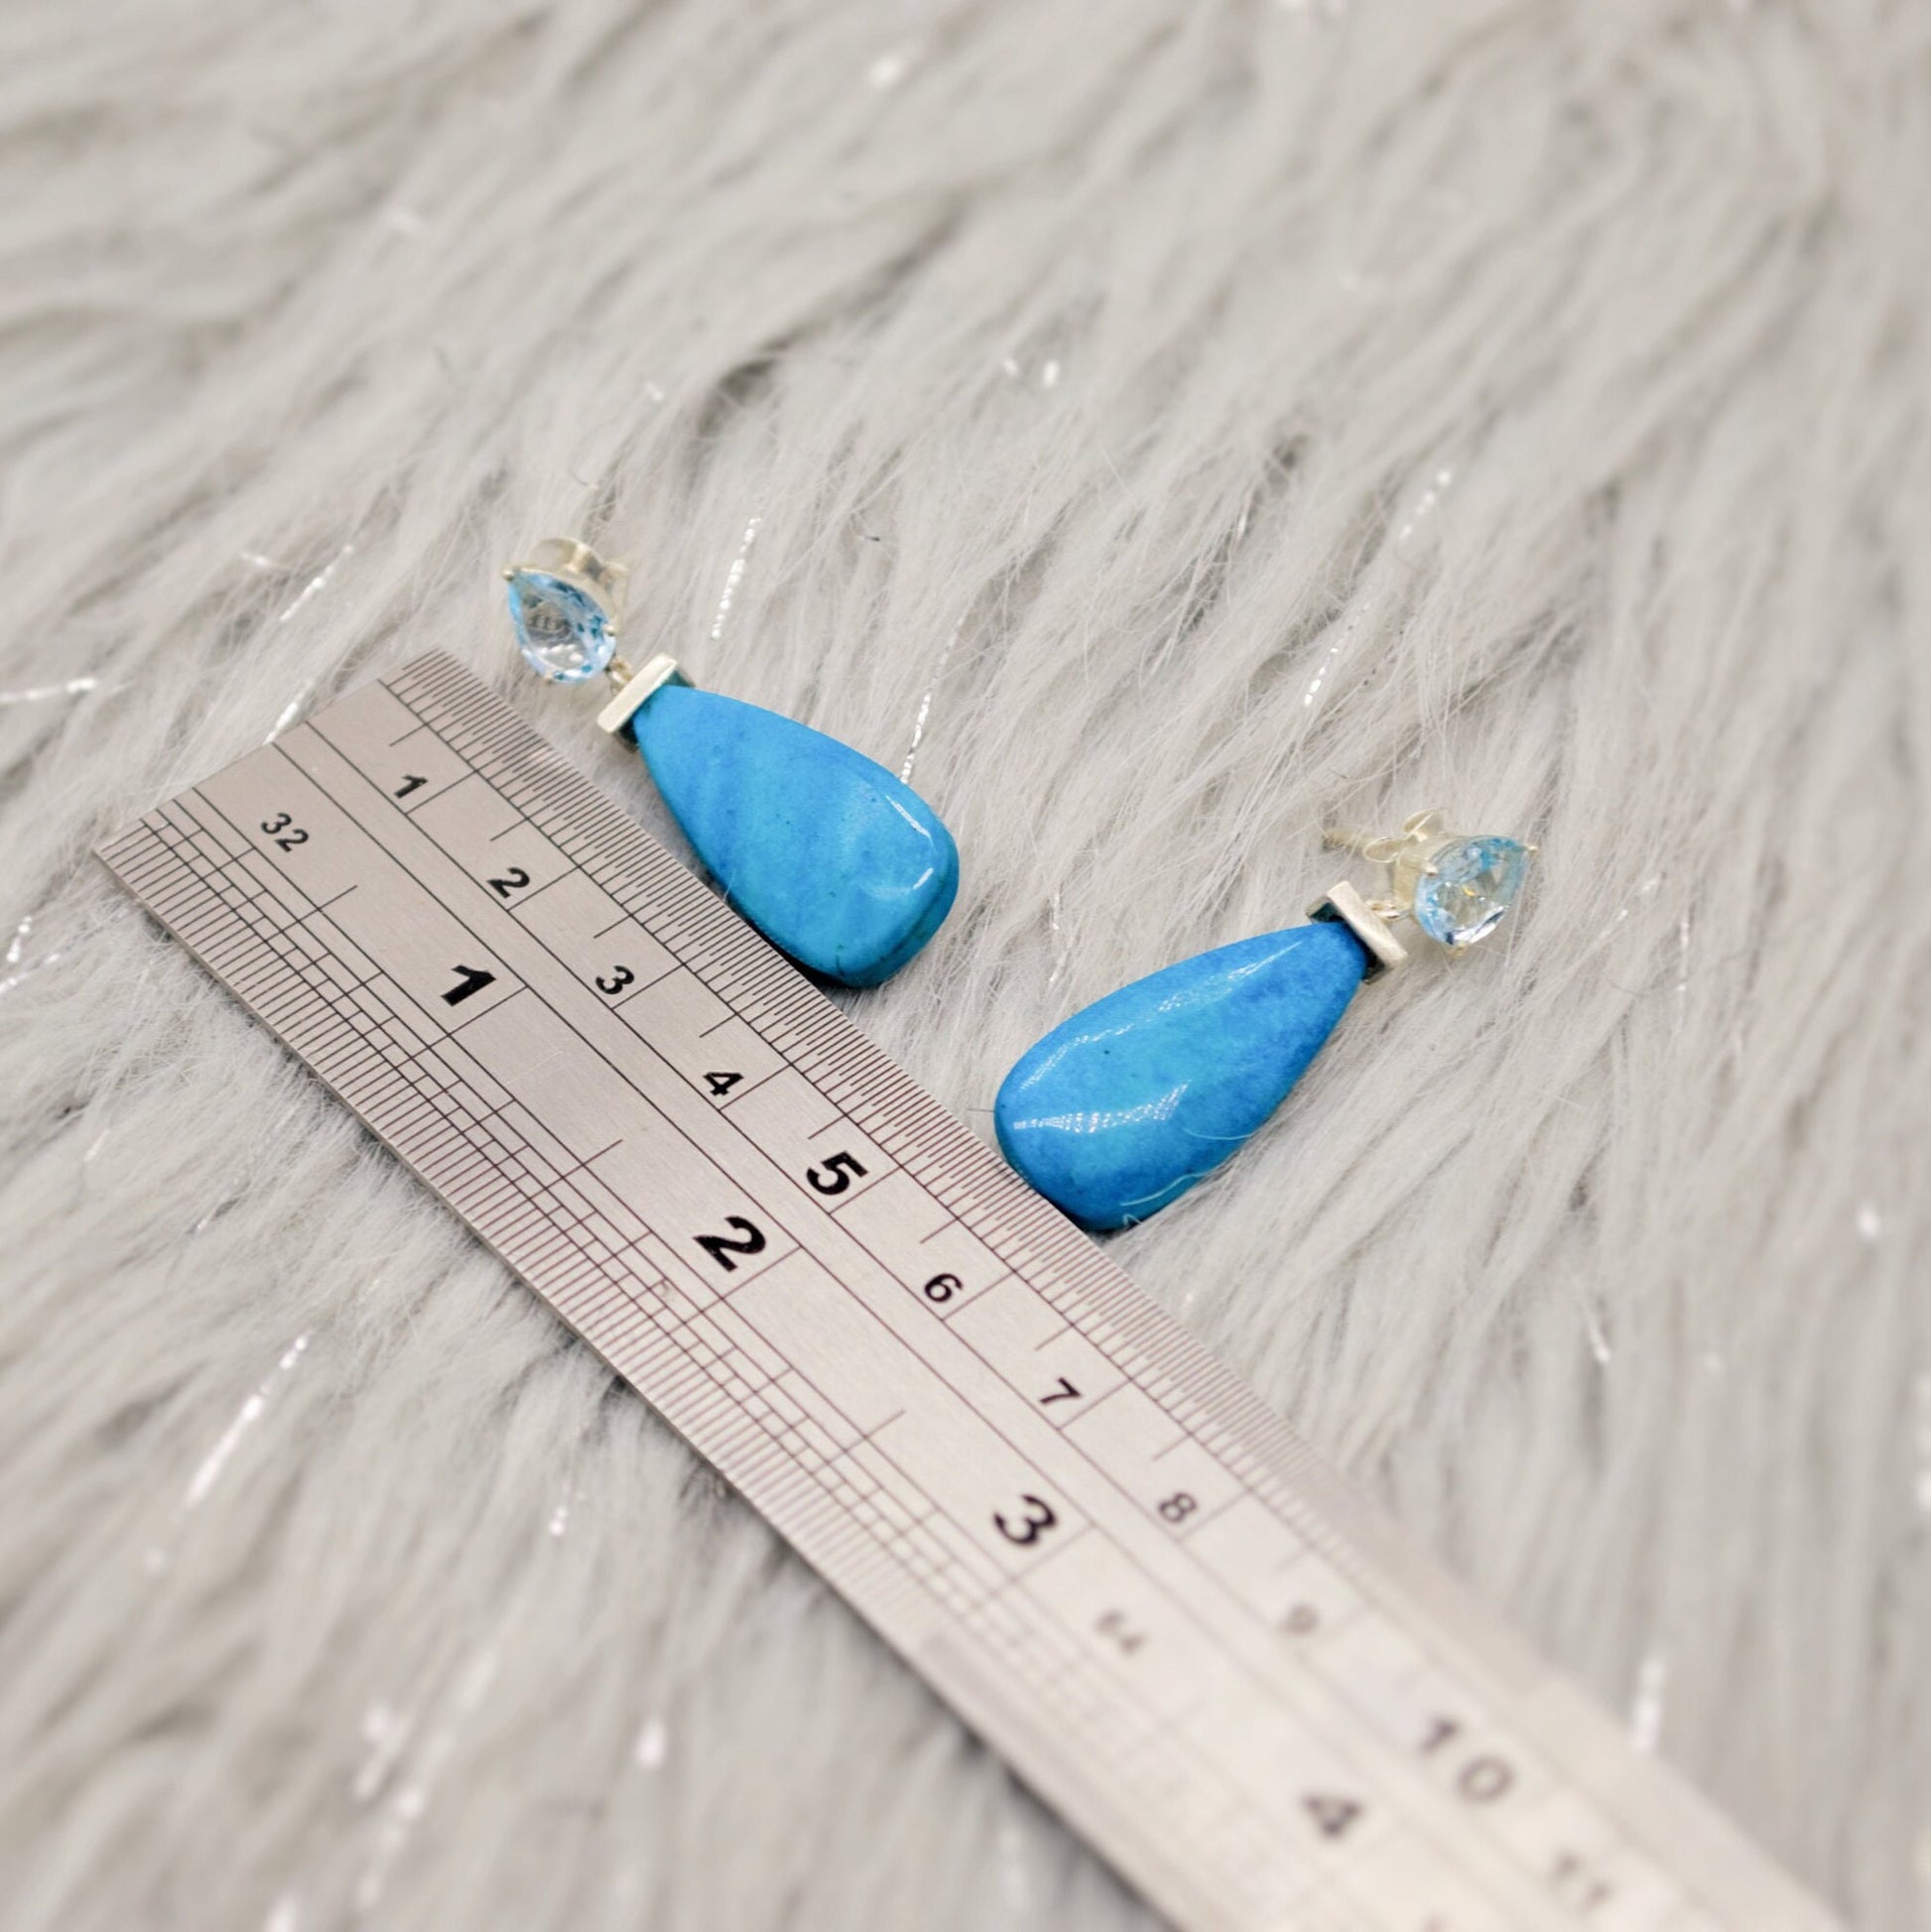 Dainty Blue Topaz & Howlite Earrings, Unique December Birthstone Jewelry, Silver Dangle Drop Earrings, Handmade Gift For Her